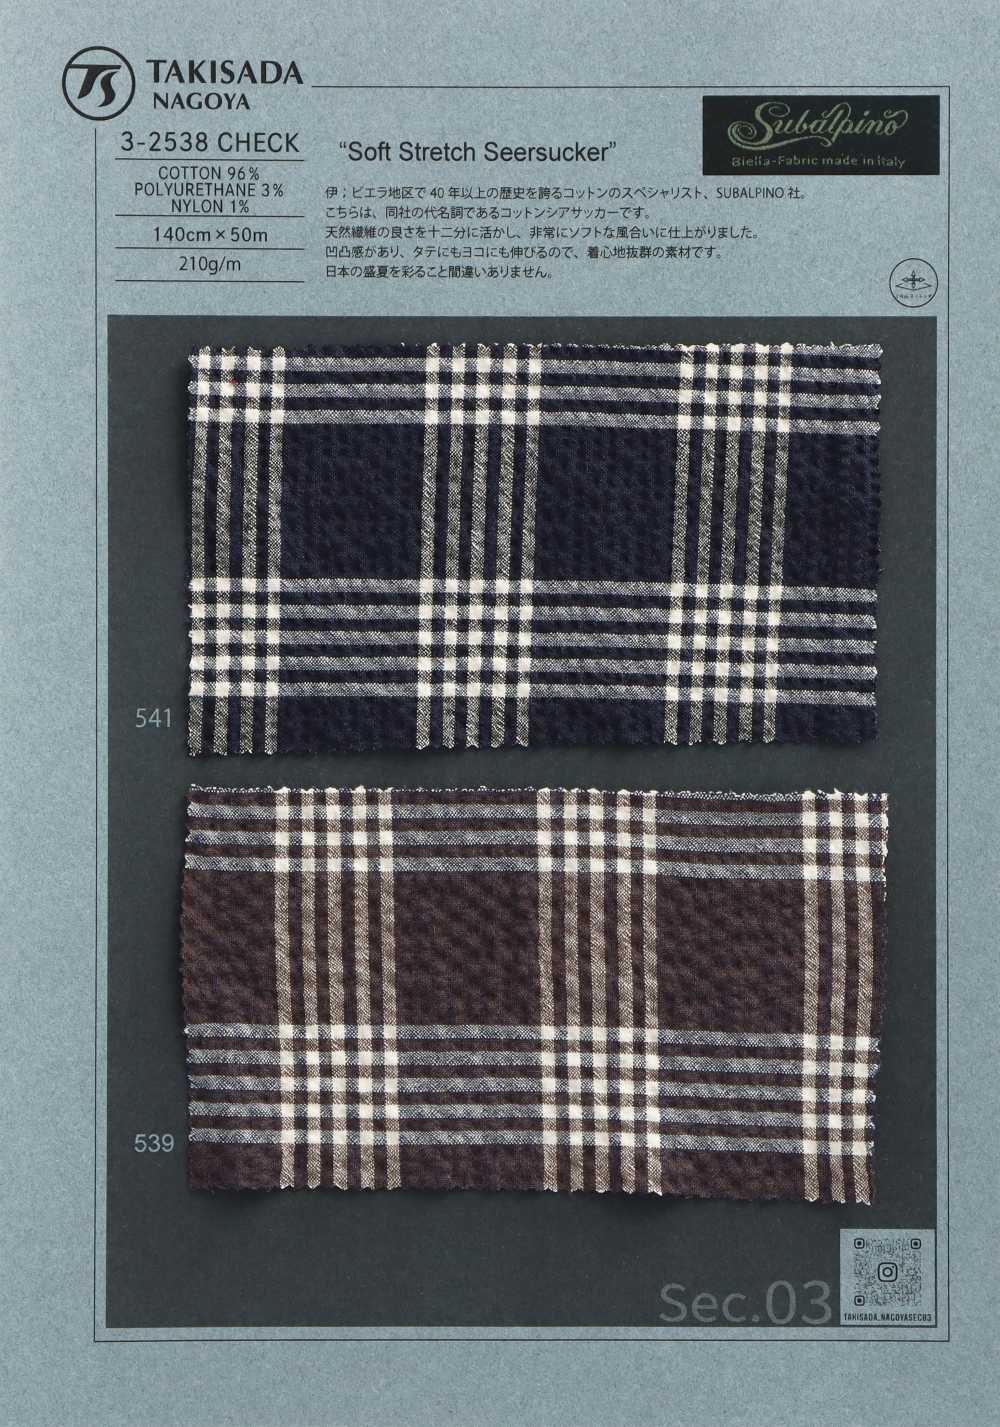 3-2538CHECK SUBALPINO Shear Seersucker Check[Fabrica Textil] Takisada Nagoya